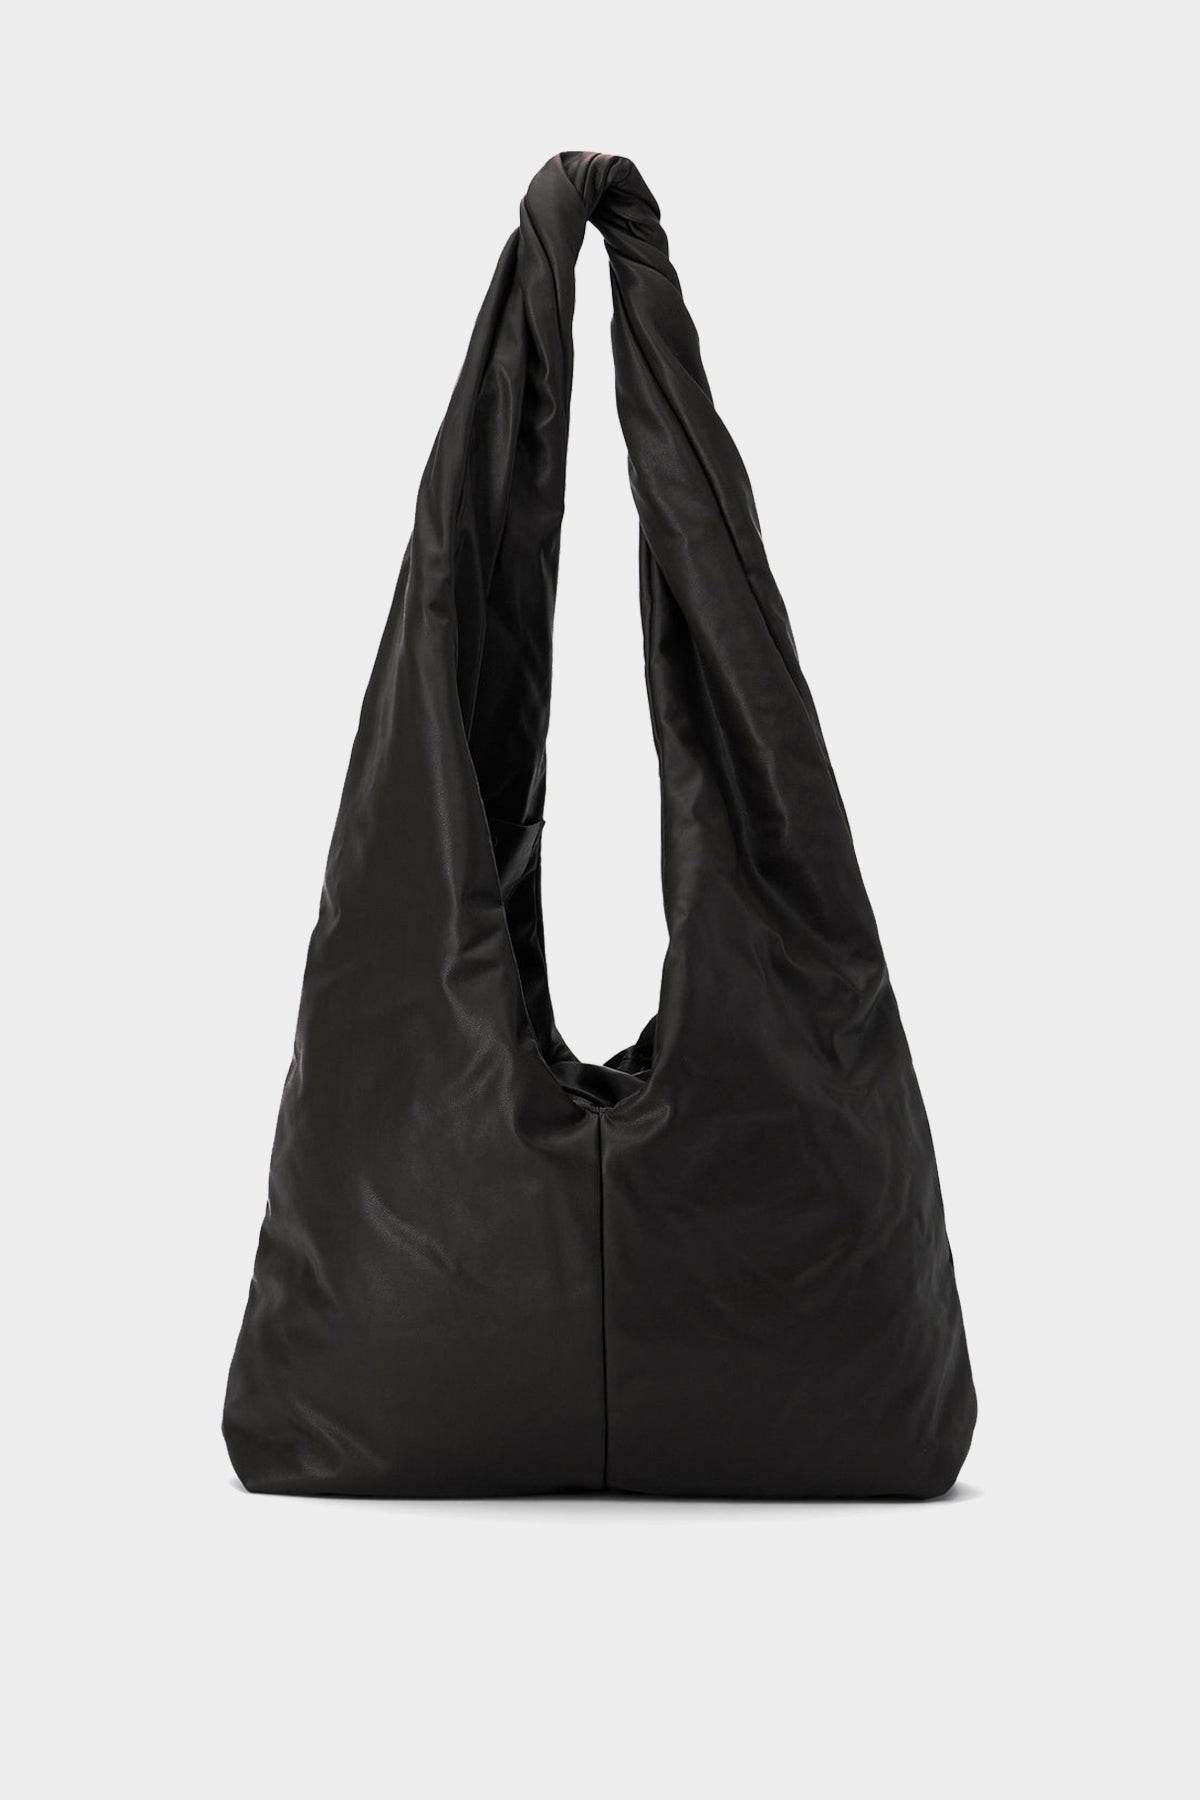 Shiloh Vegan Leather Shoulder Bag in Caviar